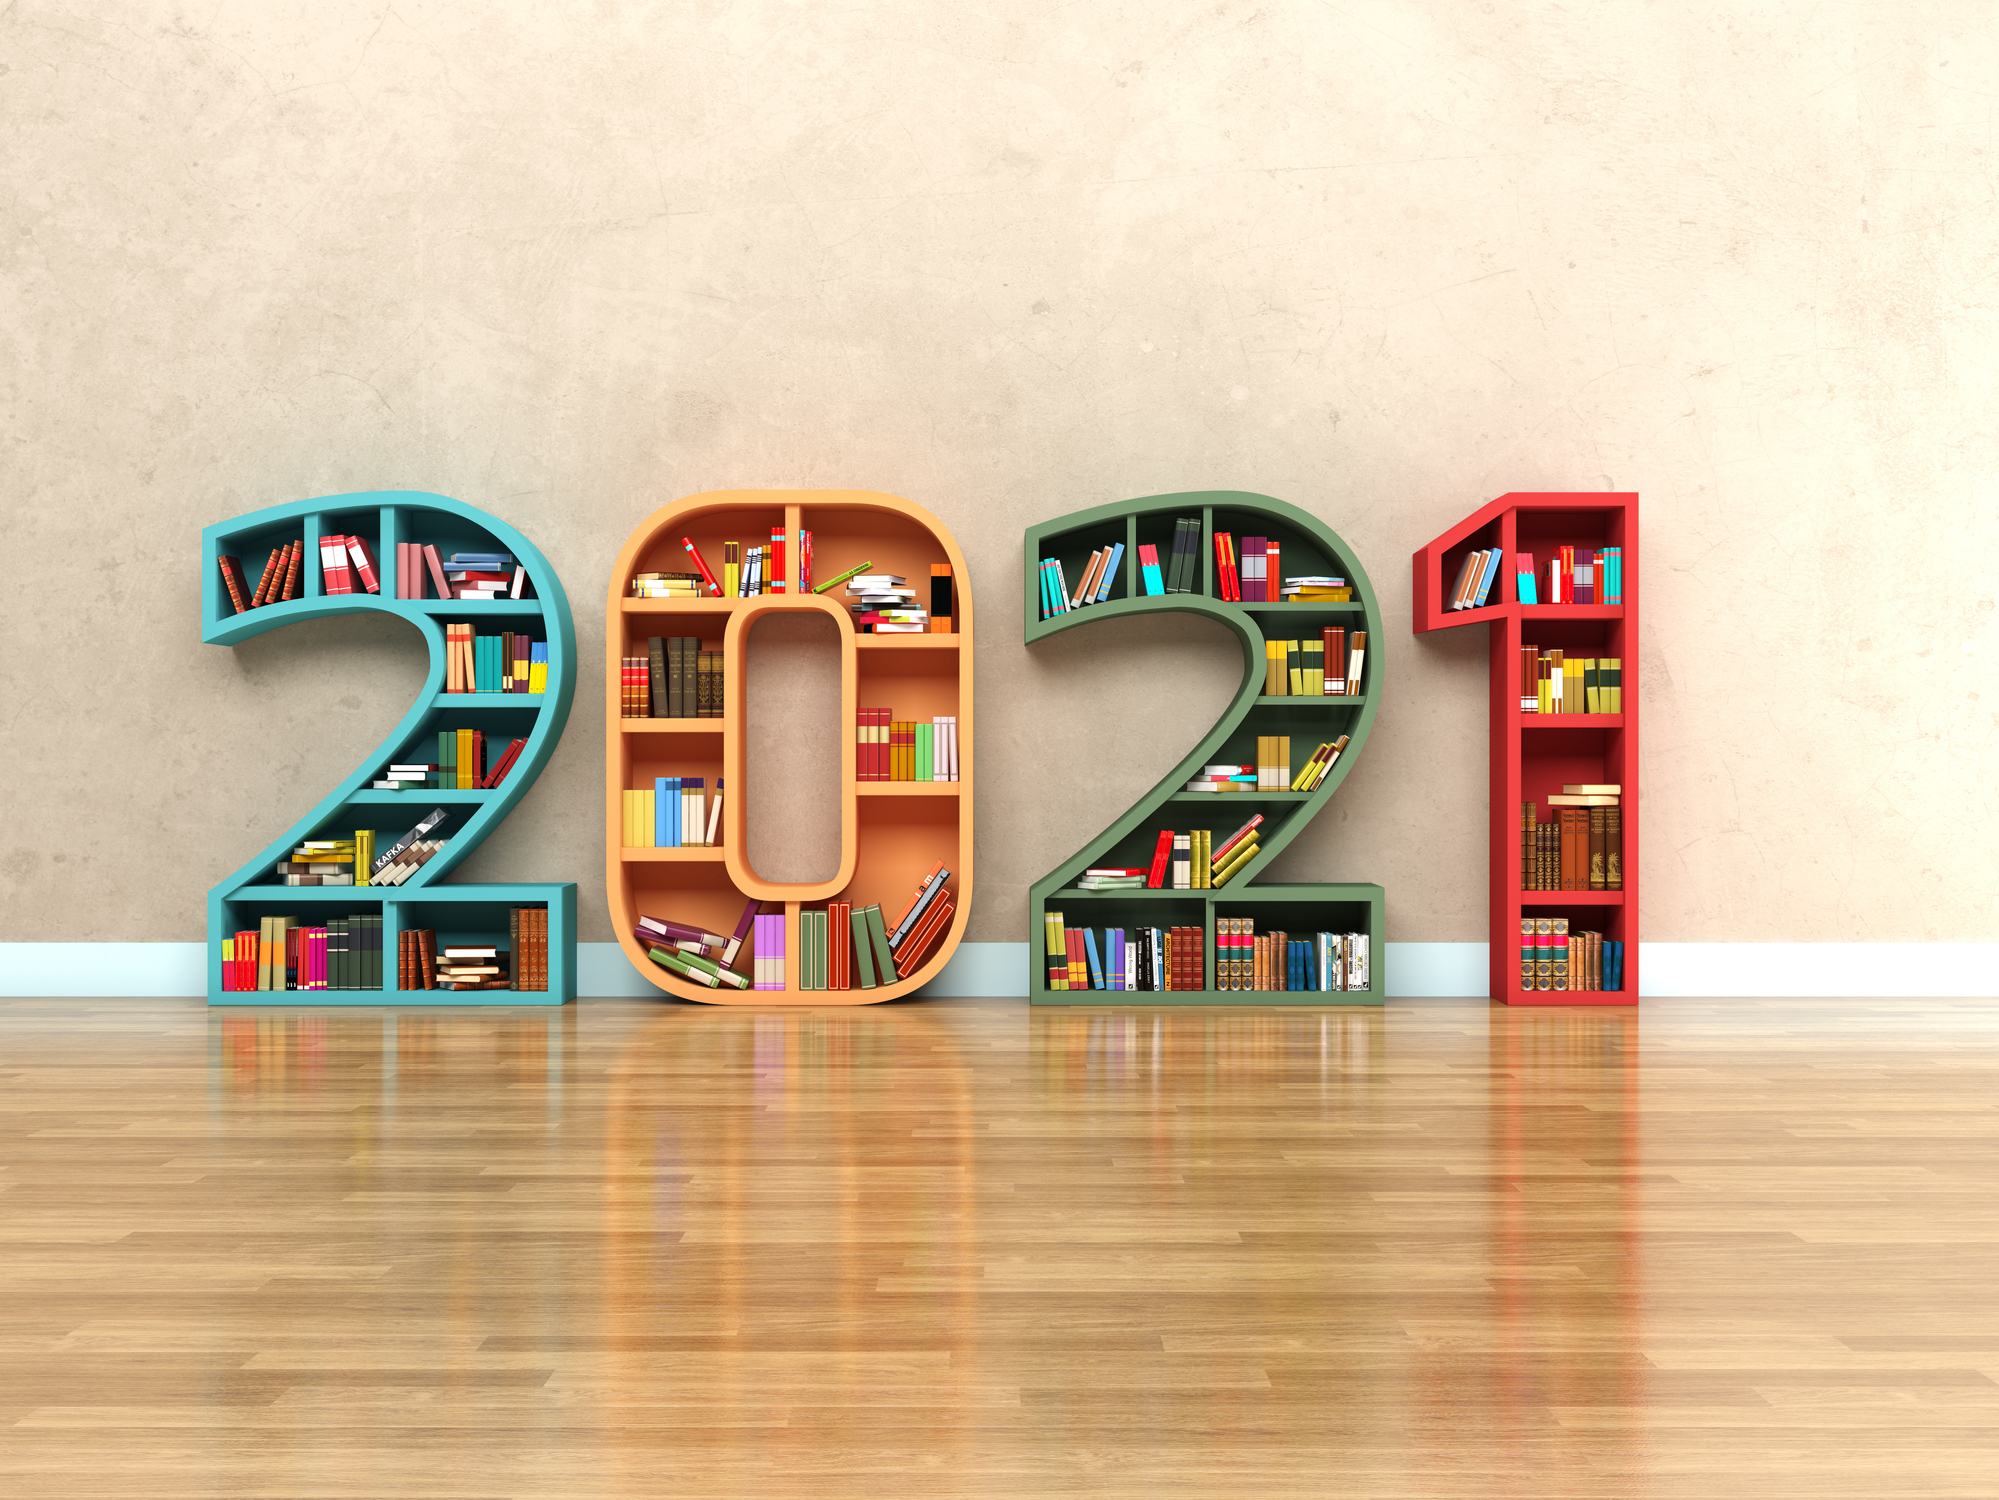 2021 shaped bookshelf